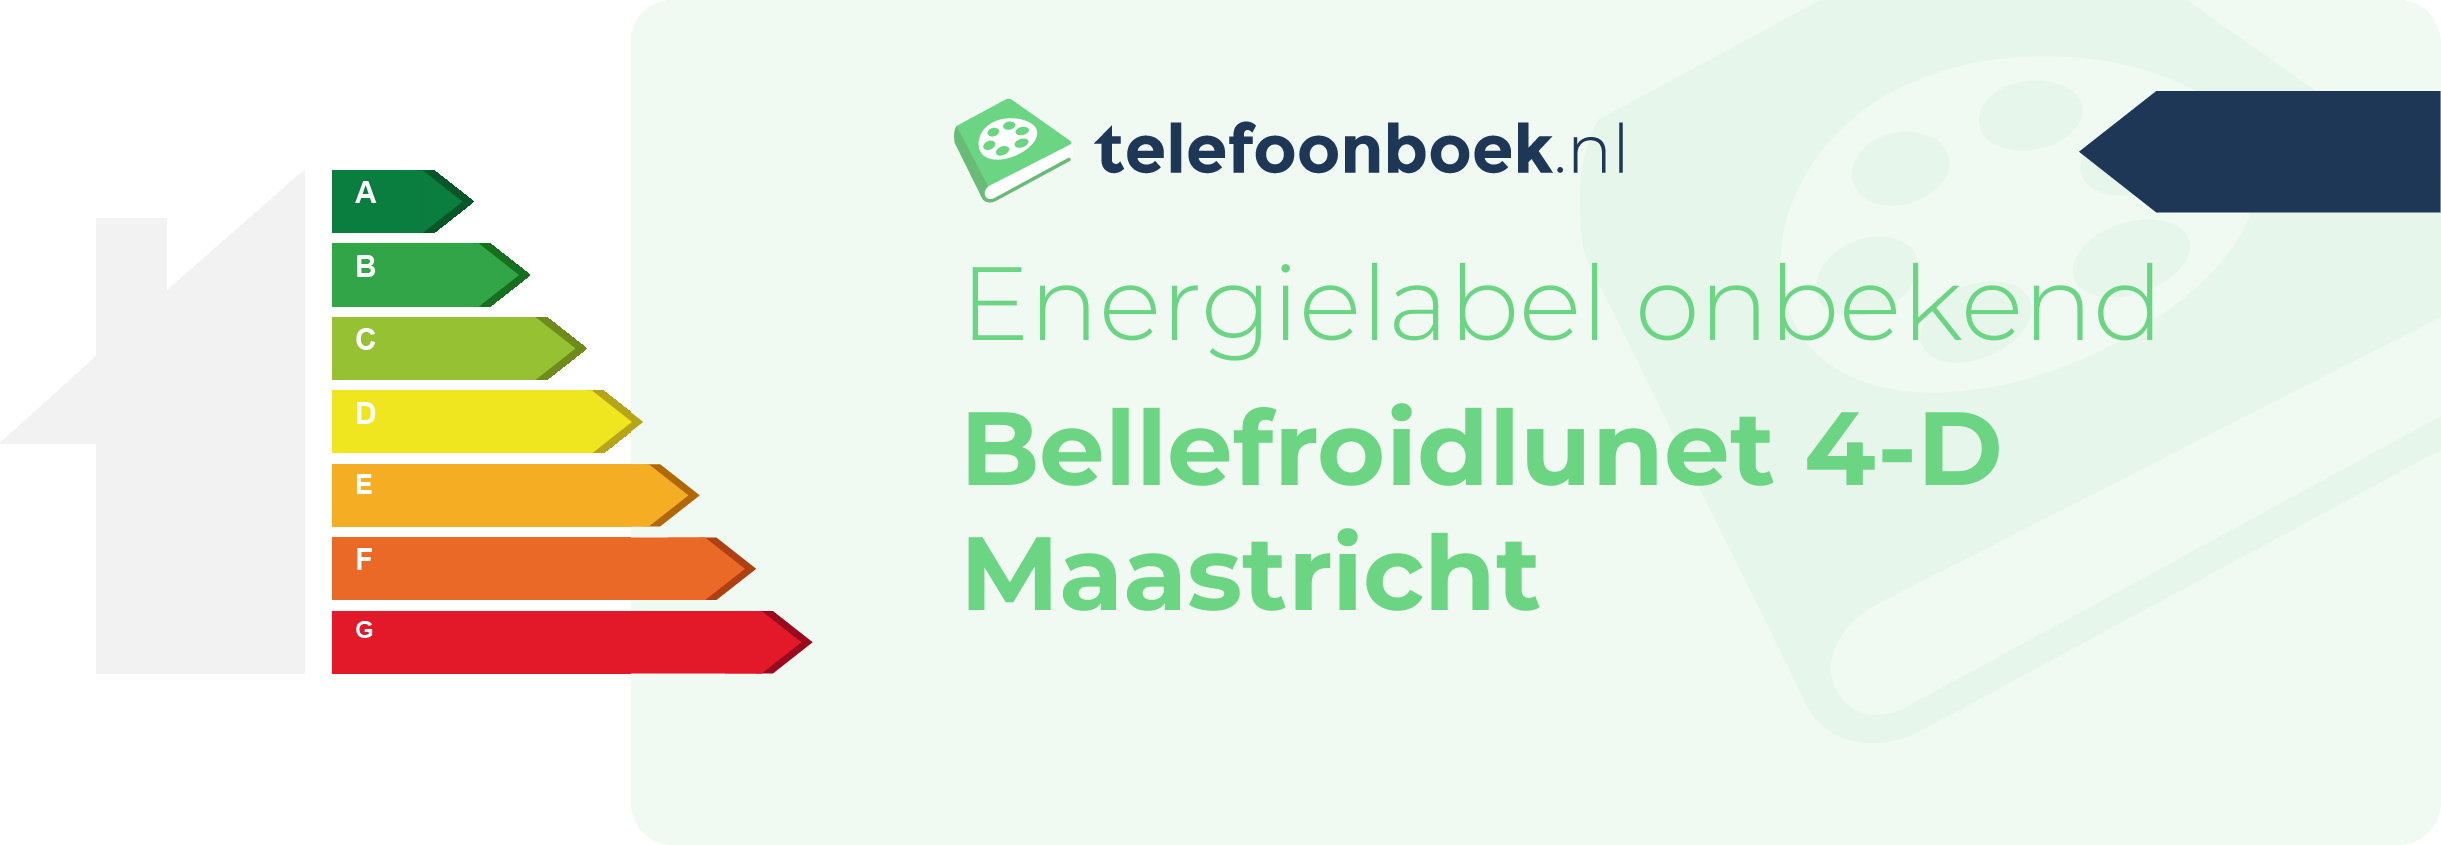 Energielabel Bellefroidlunet 4-D Maastricht